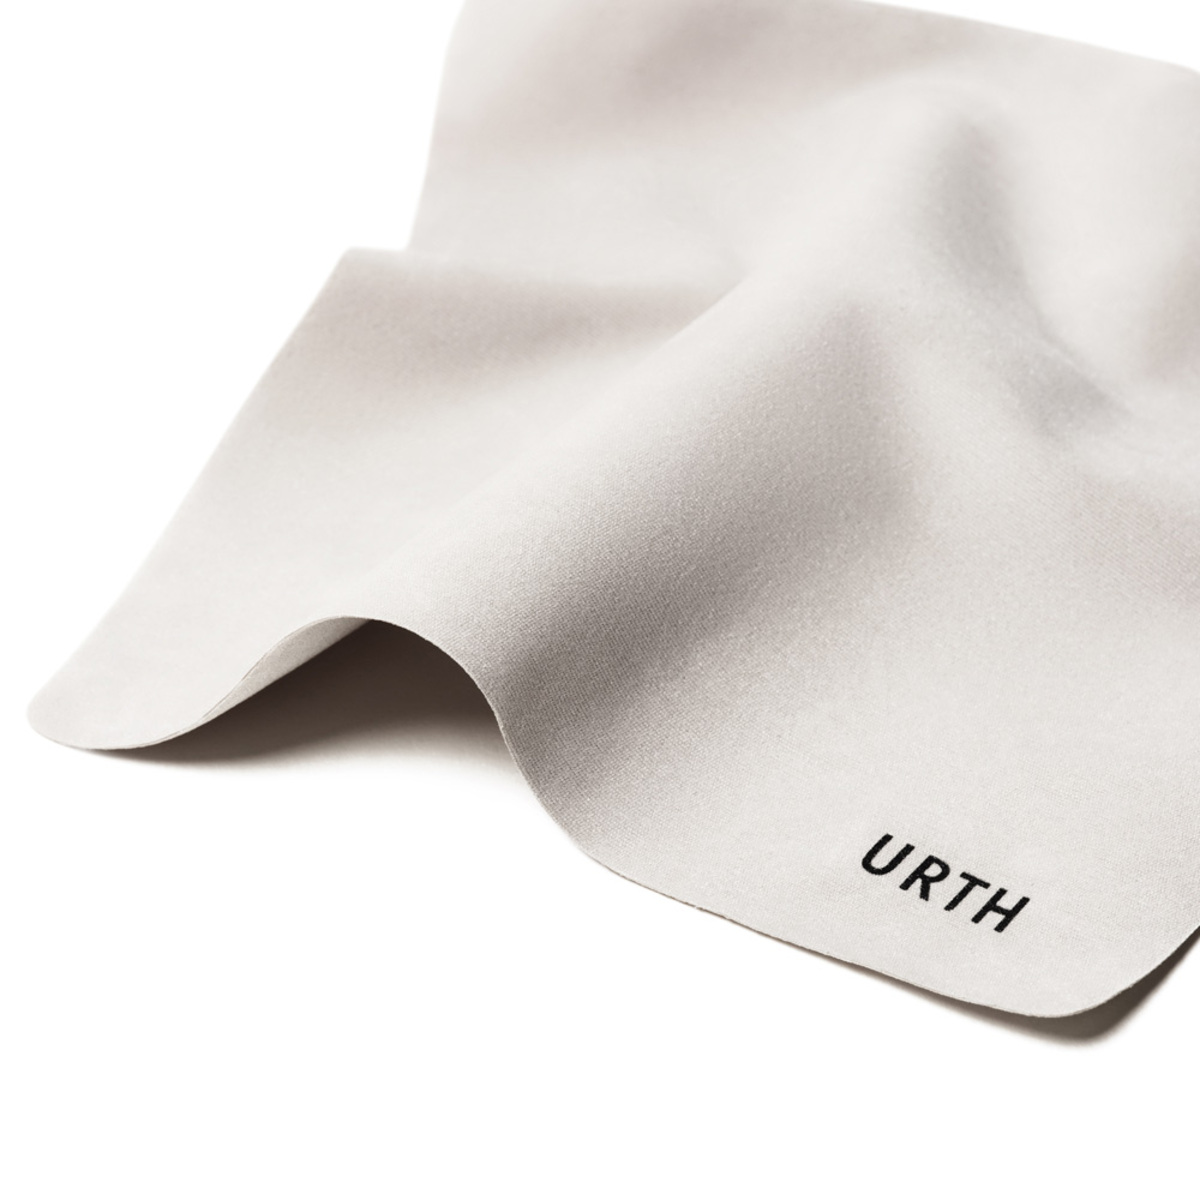 Urth 95mm Ethereal ⅛ Black Mist Objektivfilter (Plus+)